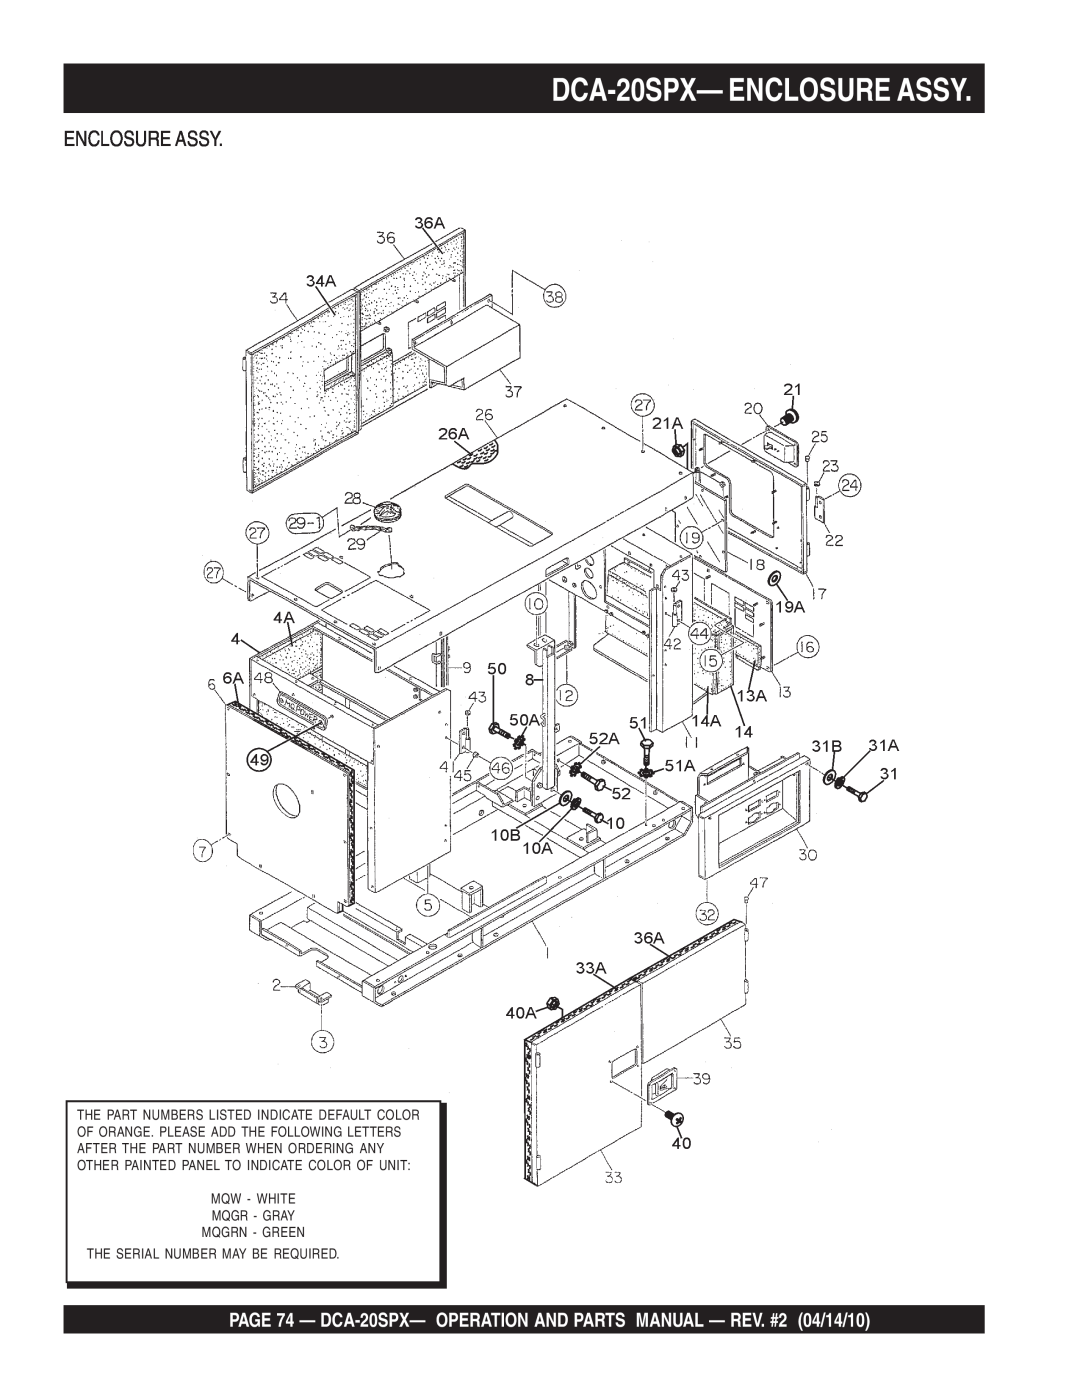 Multiquip operation manual DCA-20SPX- ENCLOSURE ASSY, PAGE 74 - DCA-20SPX- OPERATION AND PARTS MANUAL - REV. #2 04/14/10 